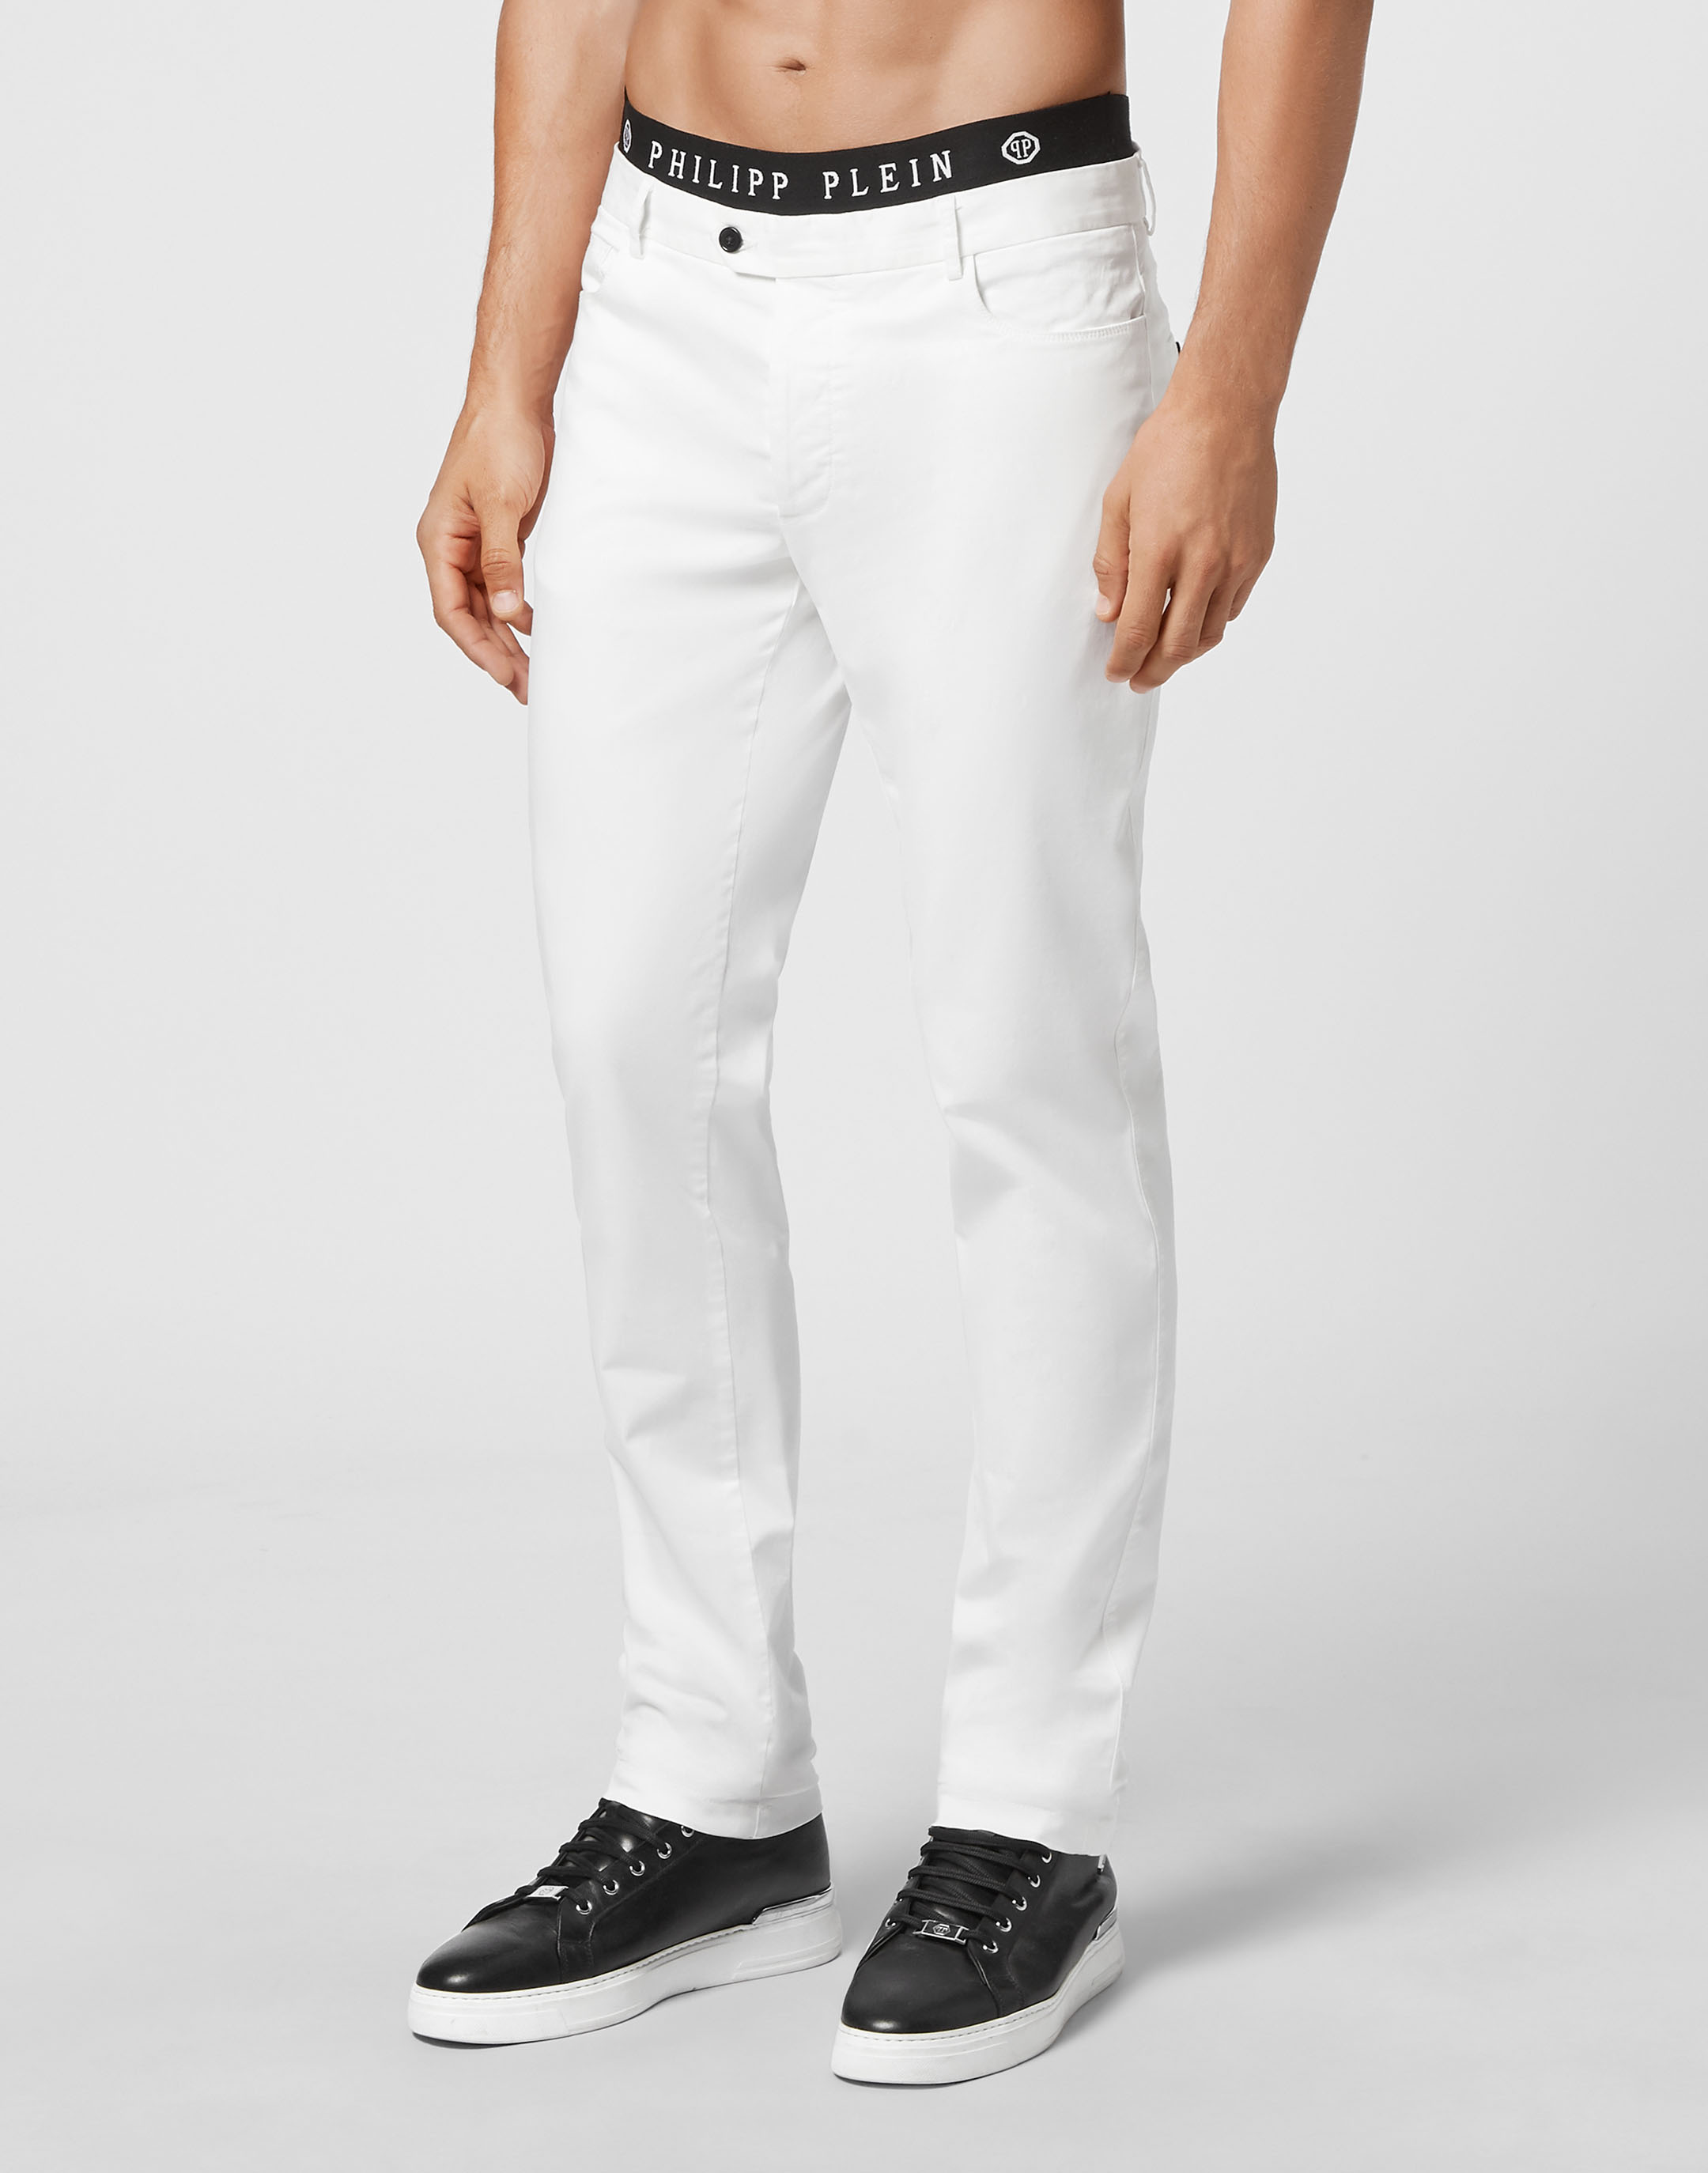 Cotton Long Trousers Chinos fit Iconic Plein | Philipp Plein